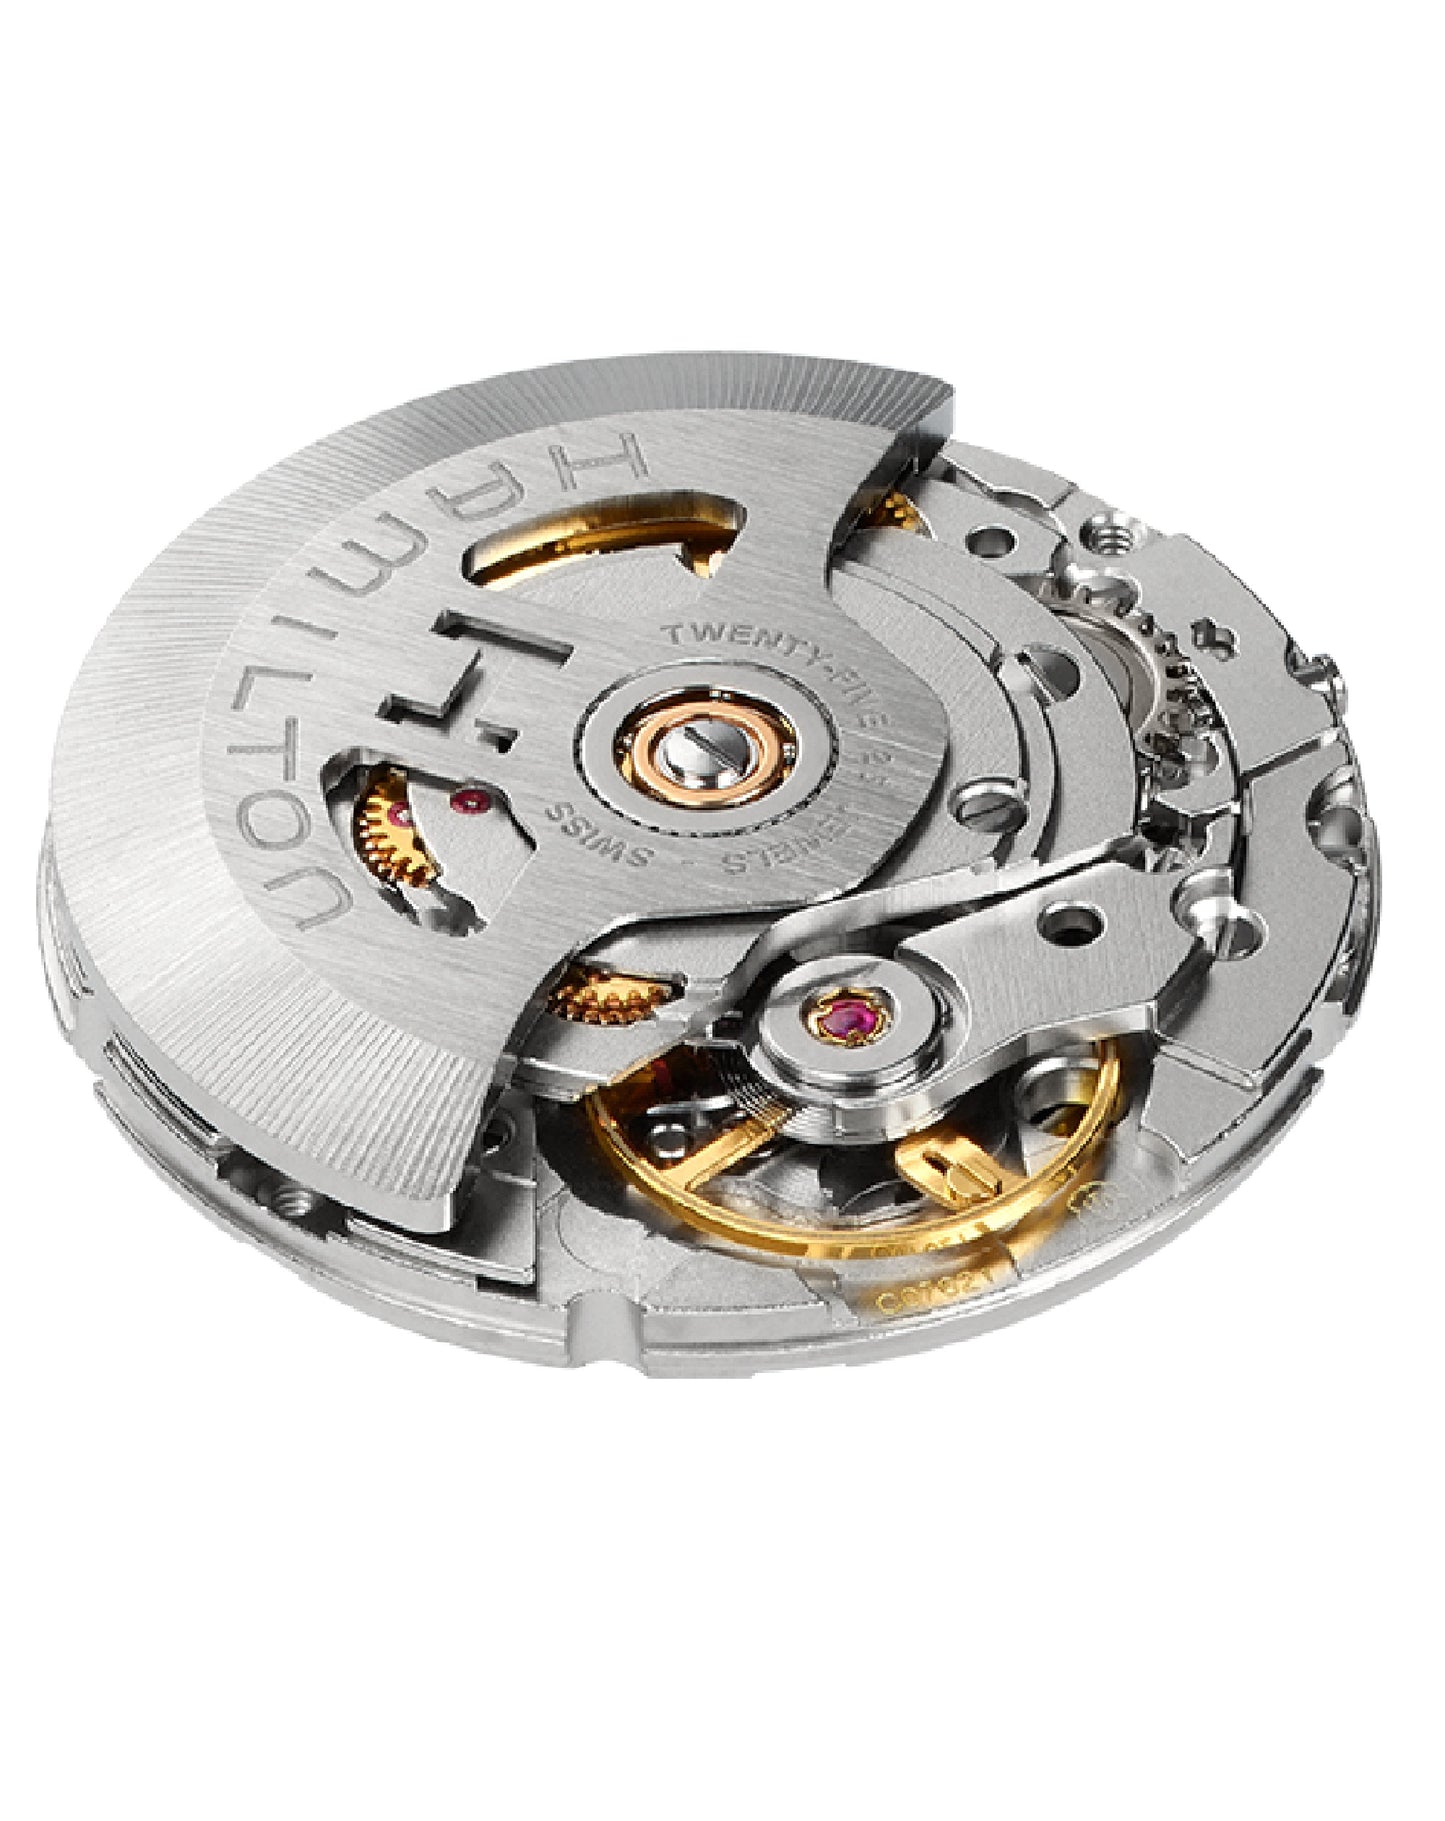 Hamilton H43515135 Hamilton Automatic Broadway 42mm Watch